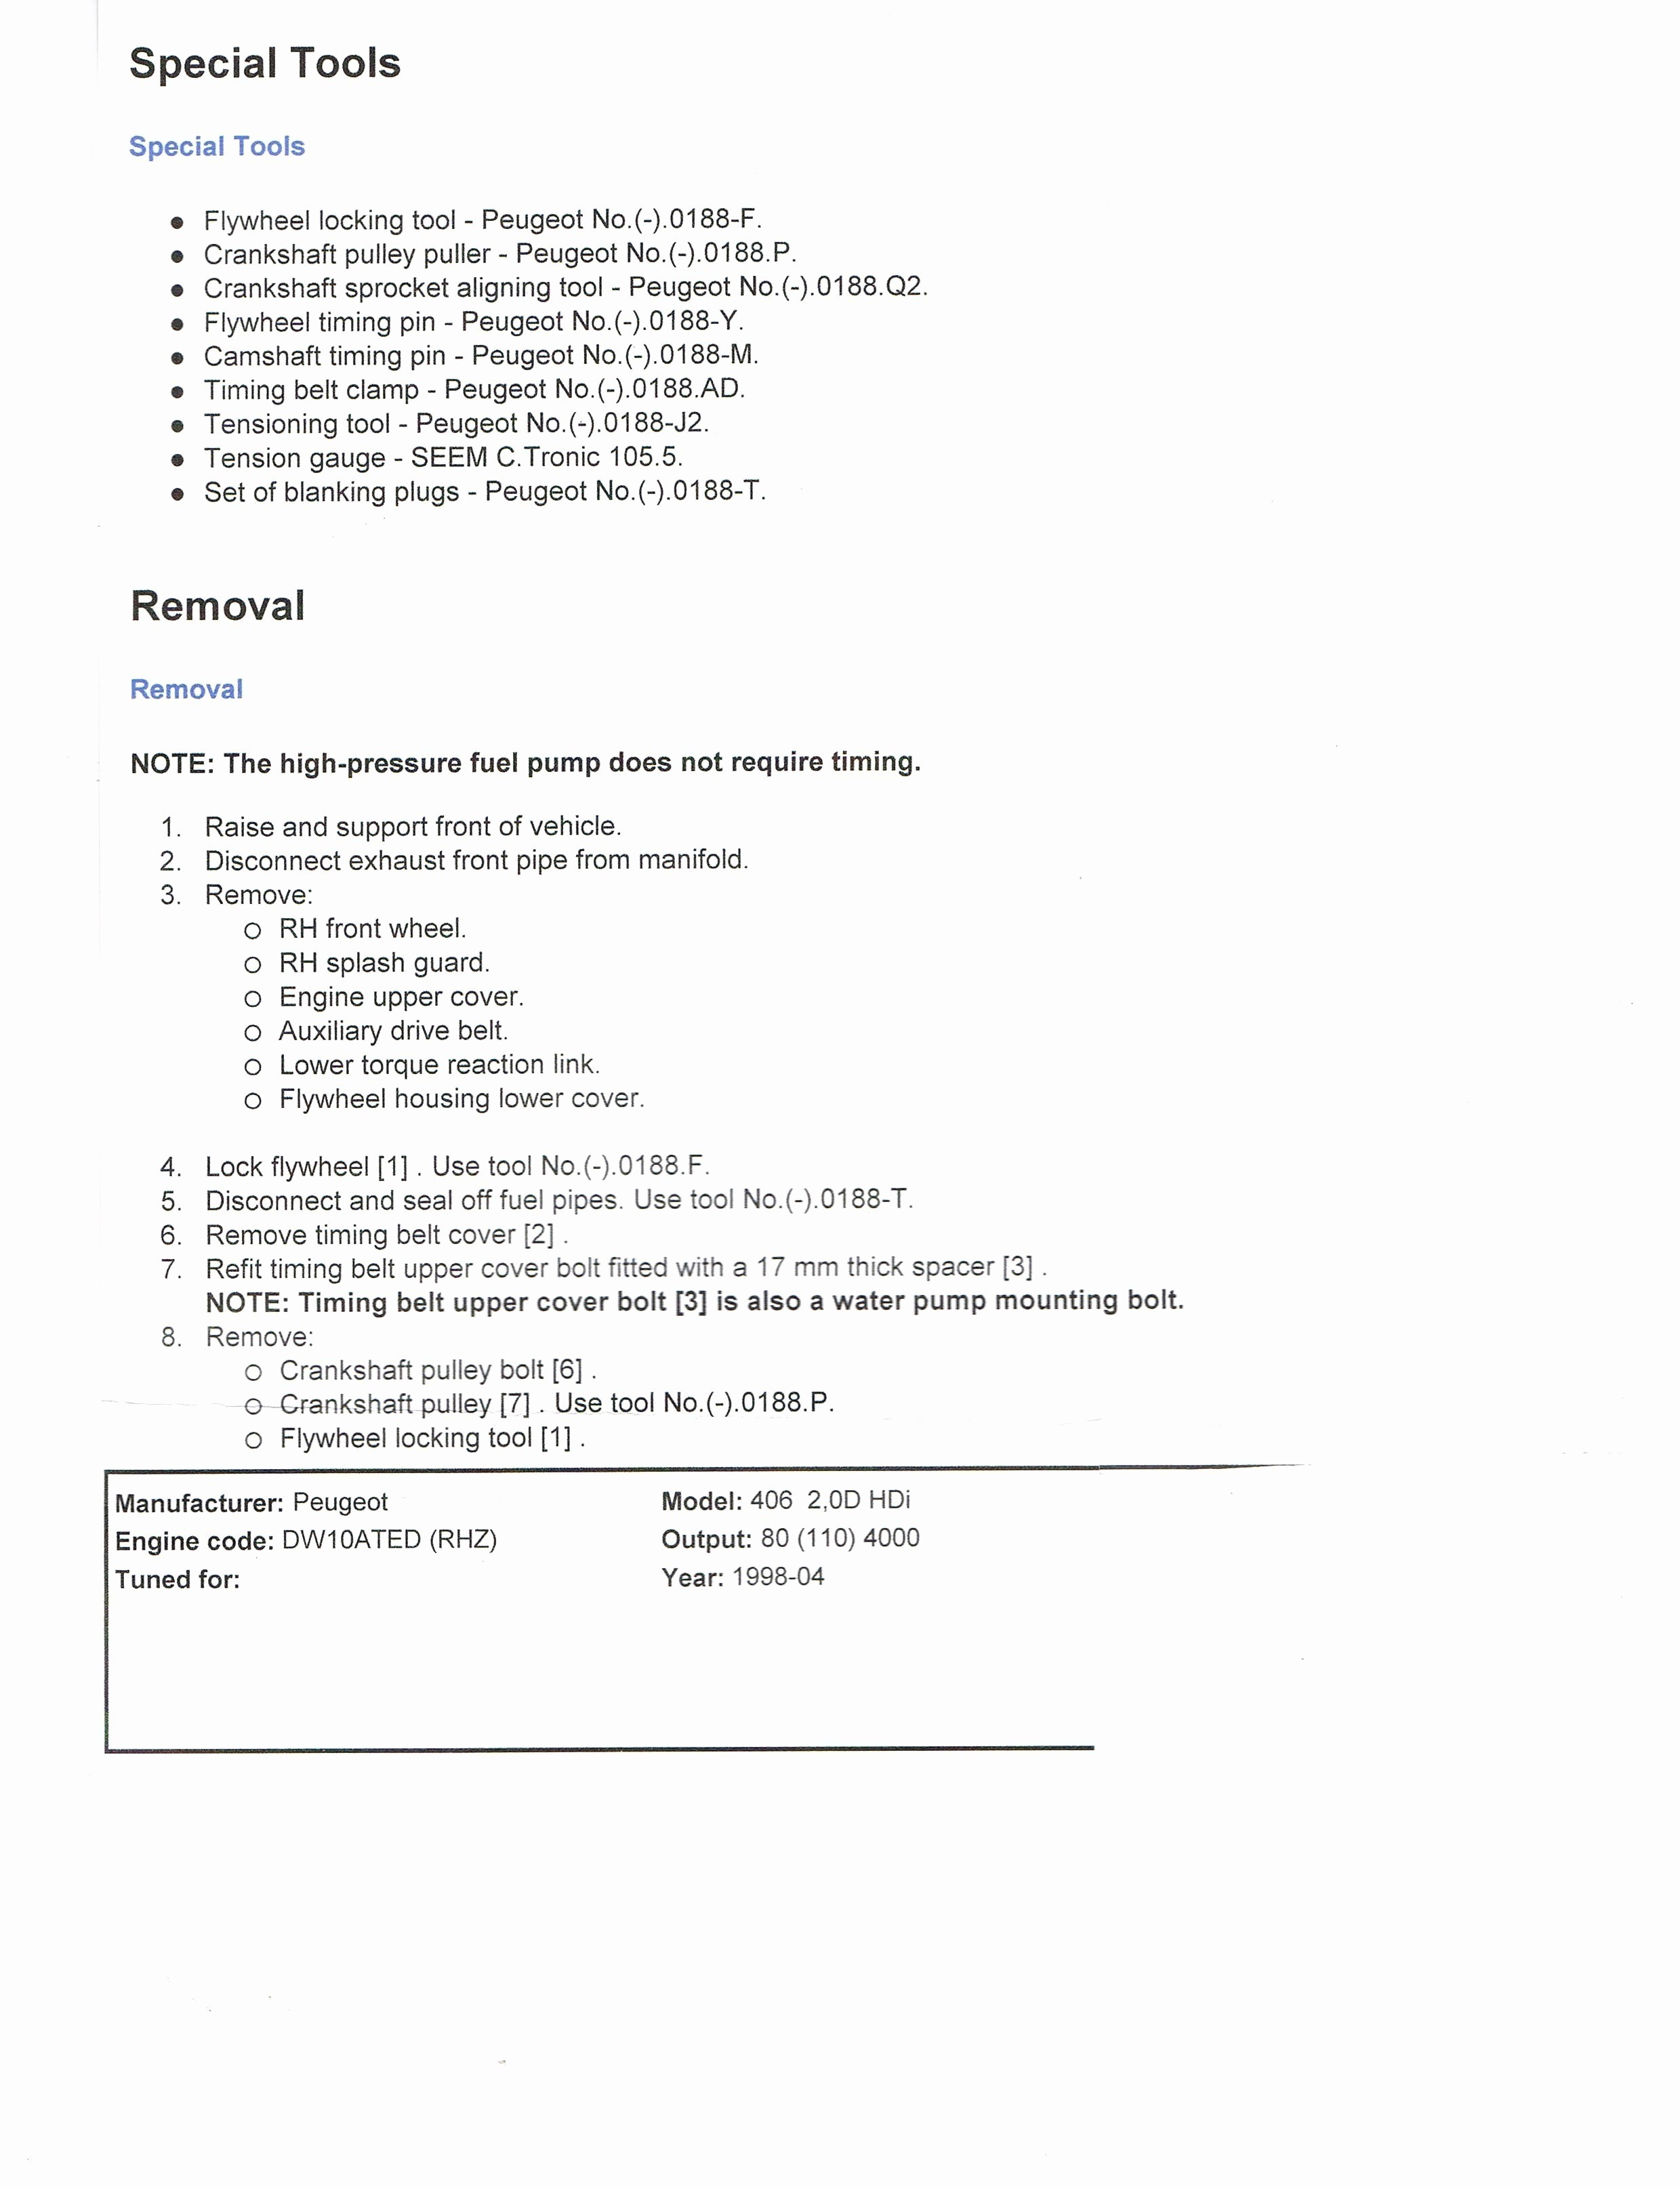 How To Fill Out A Resume How To Fill Out A Resume Online Fresh Line Resumes Templates Save Line Resume Formats Fresh Word Line Of How To Fill Out A Resume Online how to fill out a resume|wikiresume.com